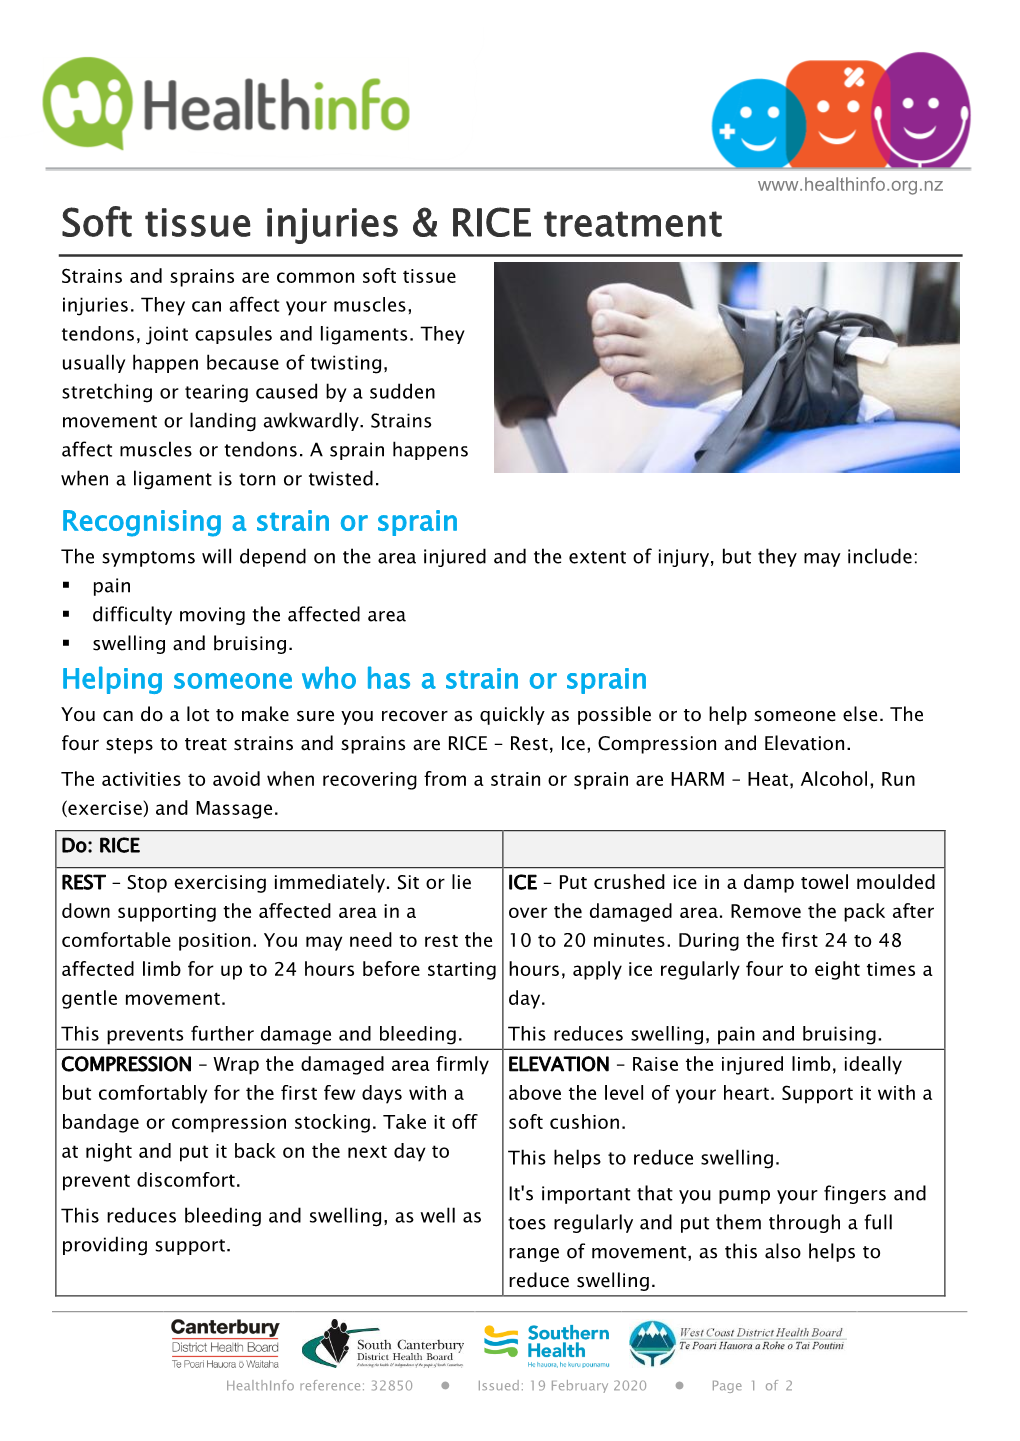 Soft Tissue Injuries & RICE Treatment